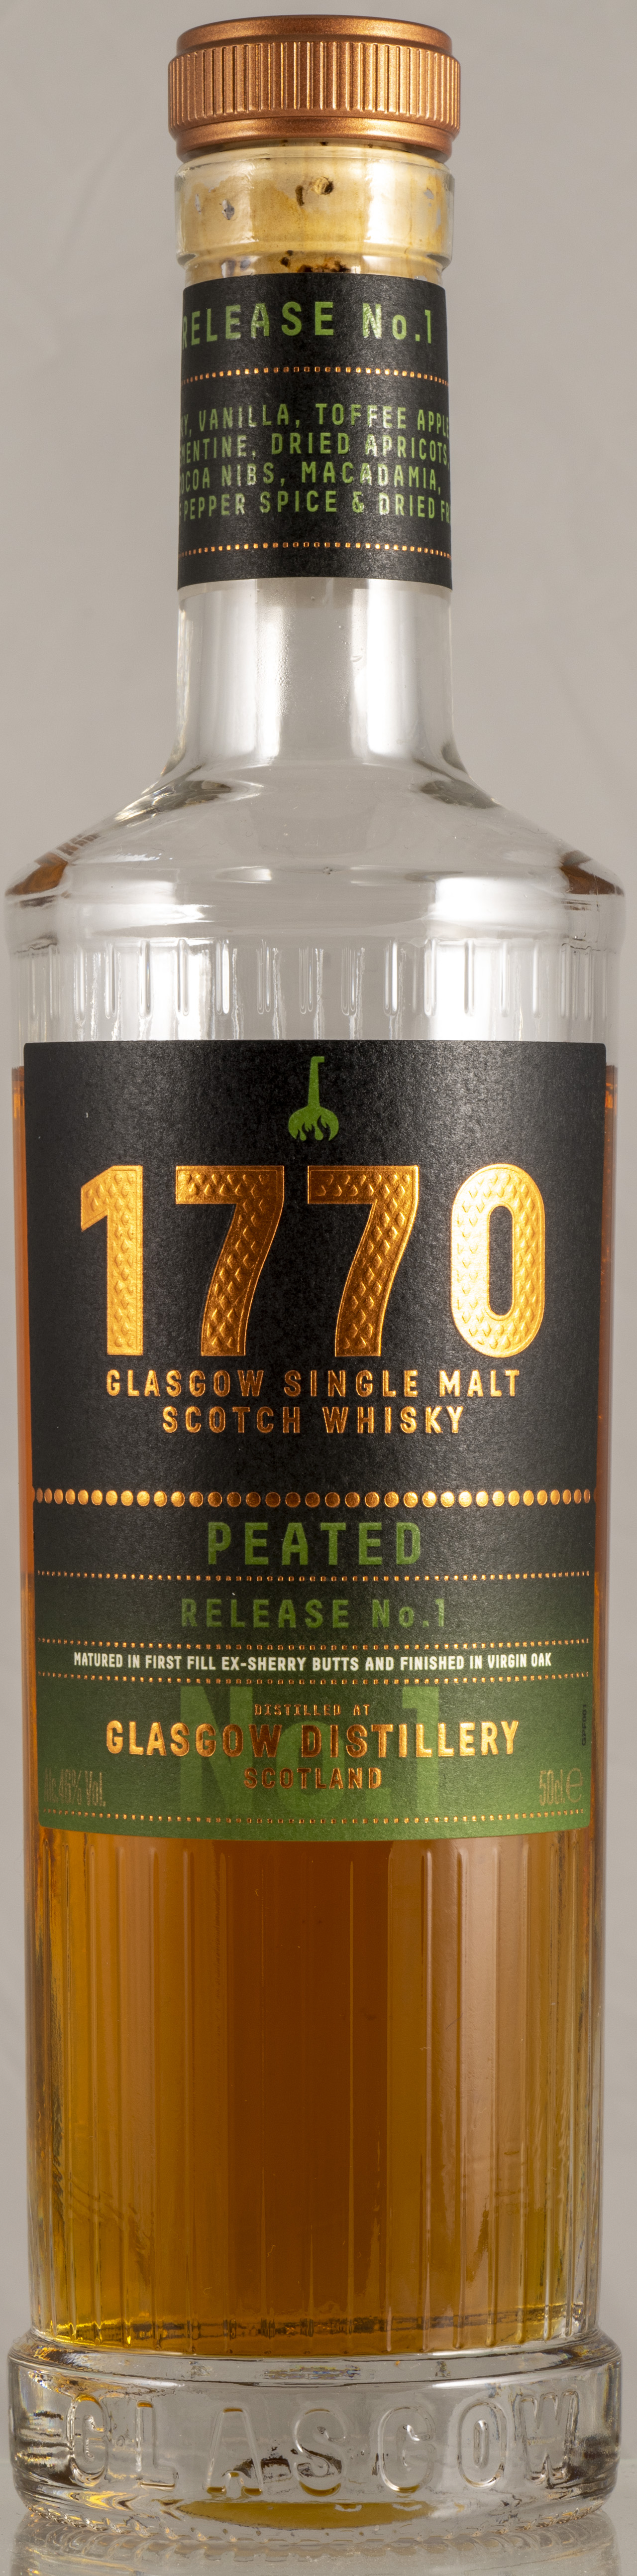 Billede: PHC_6058 - Glasgow Peated Release No 1 - bottle front.jpg